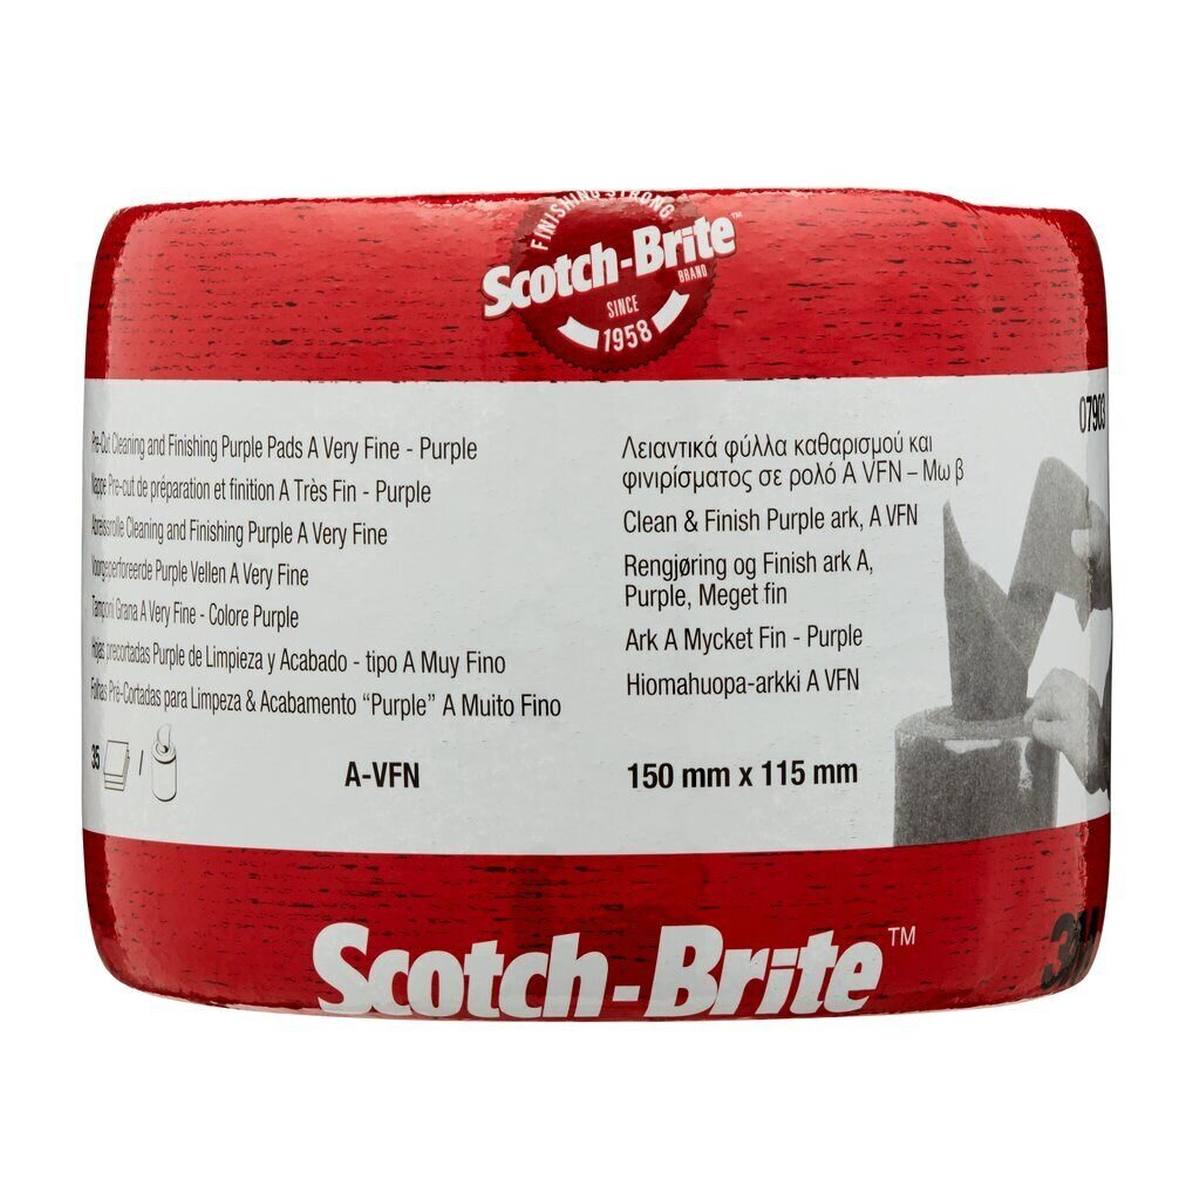 3M Scotch-Brite fleece roll CF-SR, violet, 150 mm x 115 mm, A, very fine, 35-fold perforated #07903